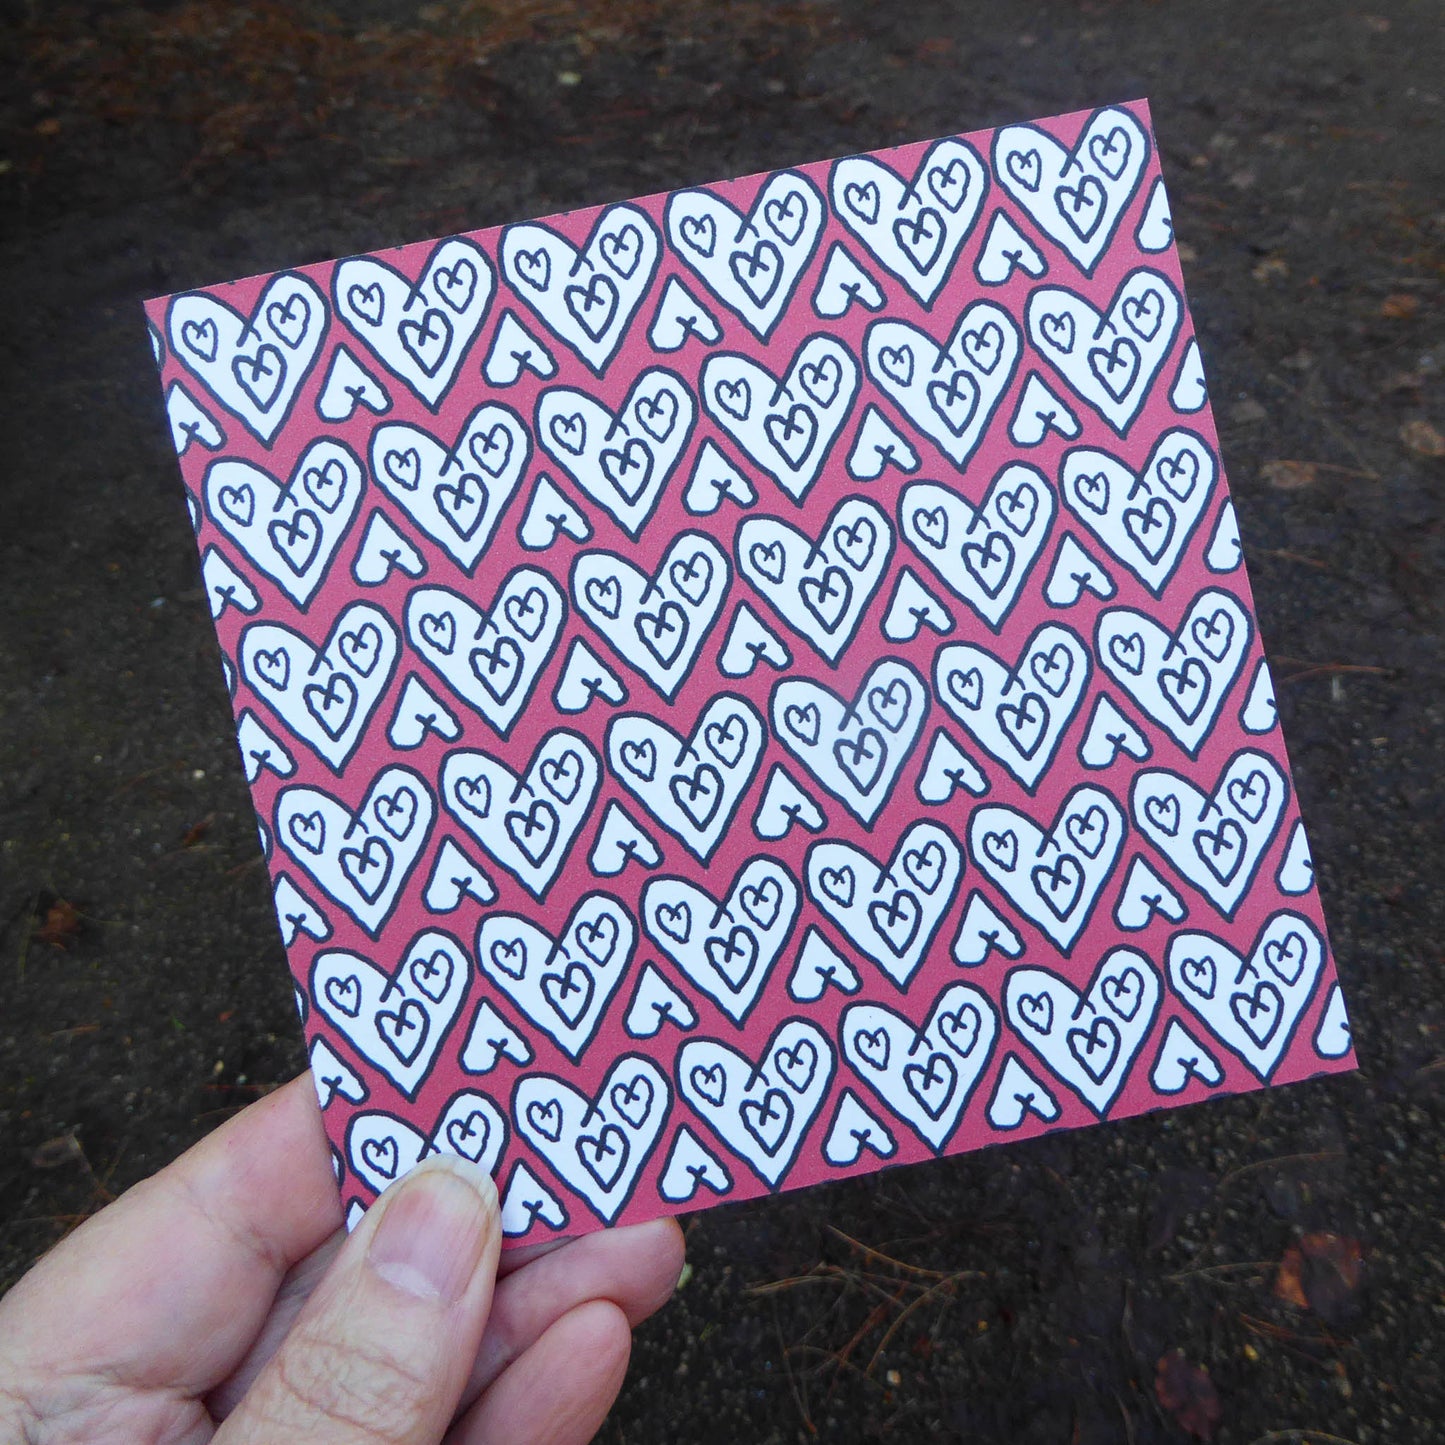 Single Greetings card - hearts - Love - valentine - wedding - Engagement - Handmade - by Norfolk based artist Debbie Osborn